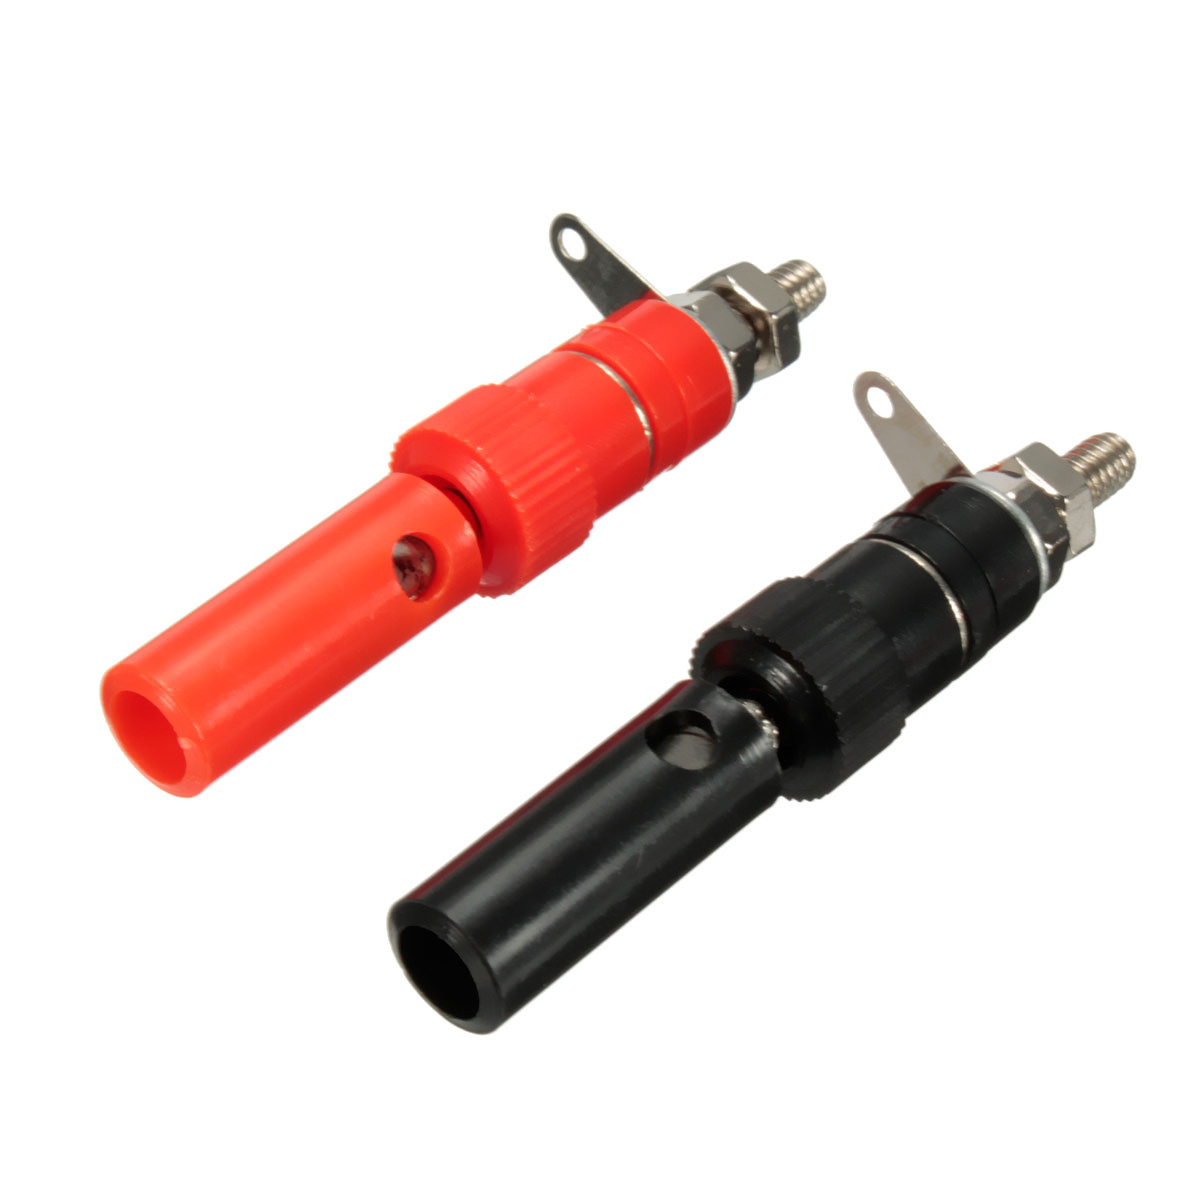 DANIU-50-Pairs-4mm-Terminal-Banana-Plug-Socket-Jack-Connectors-Instrument-Light-Tools-Black-and-Red-1358118-8